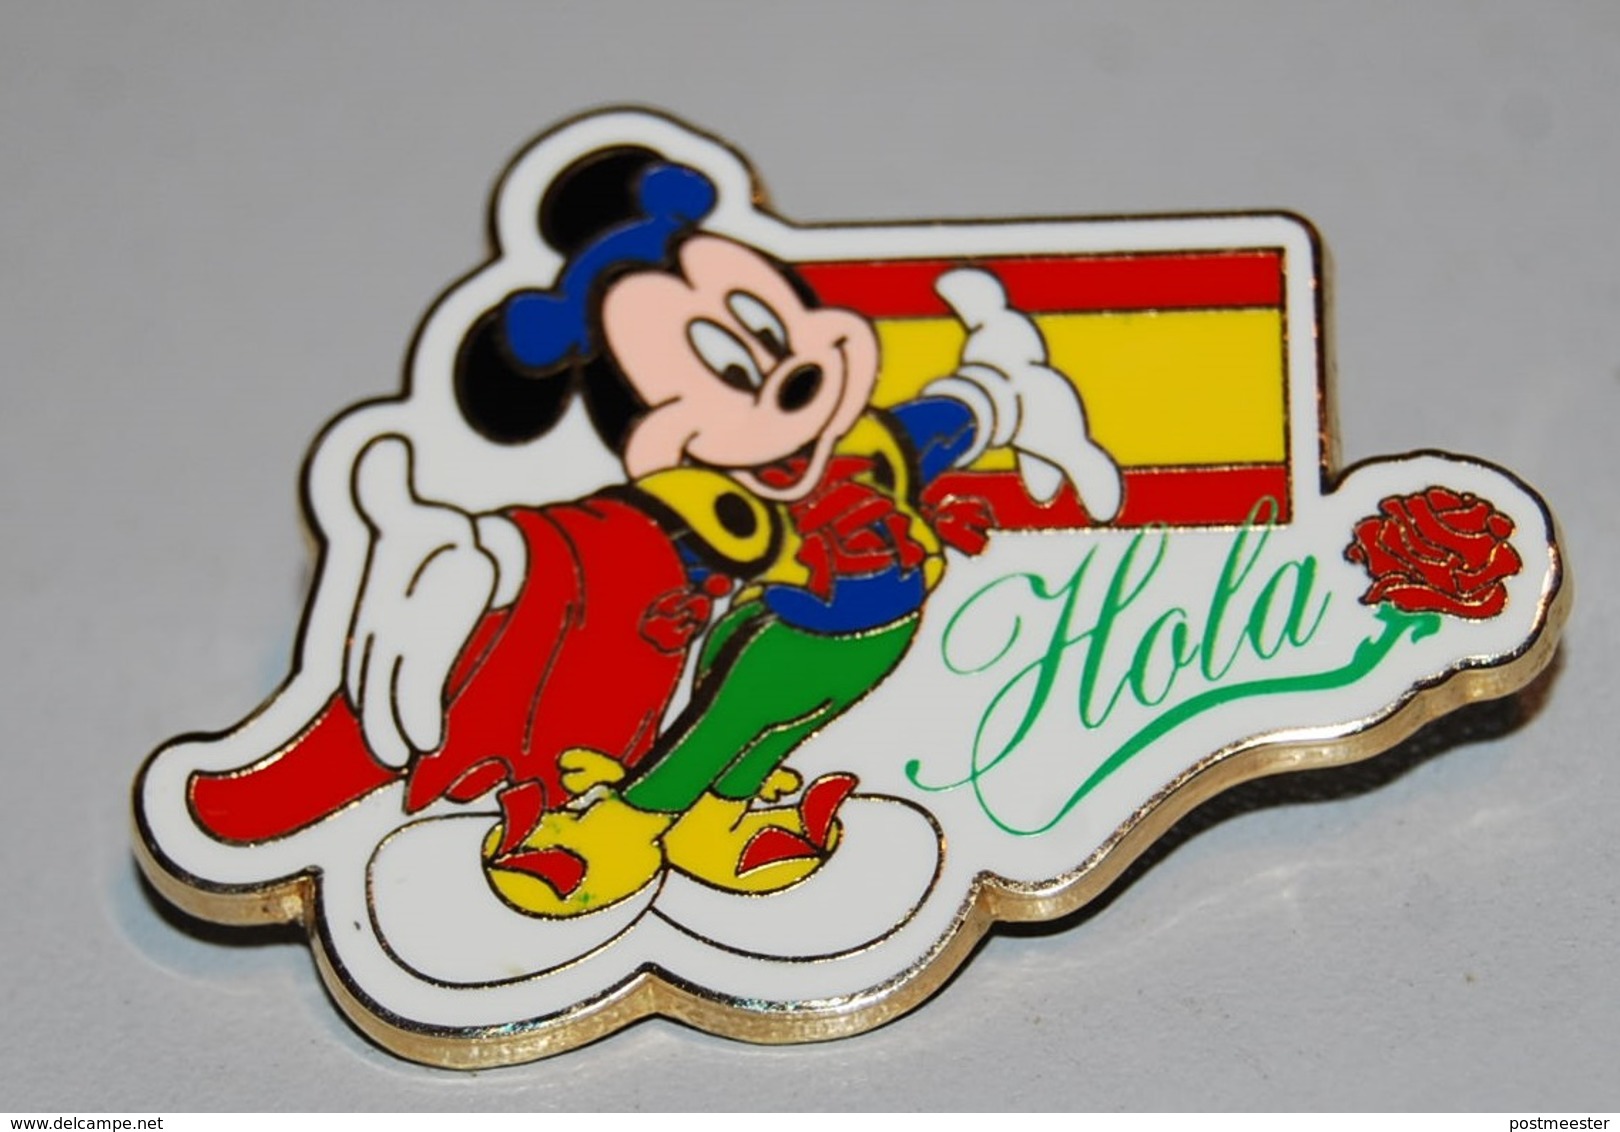 DLRP - Mickey Mouse (Spain/Hola)   Open Edition - Disney